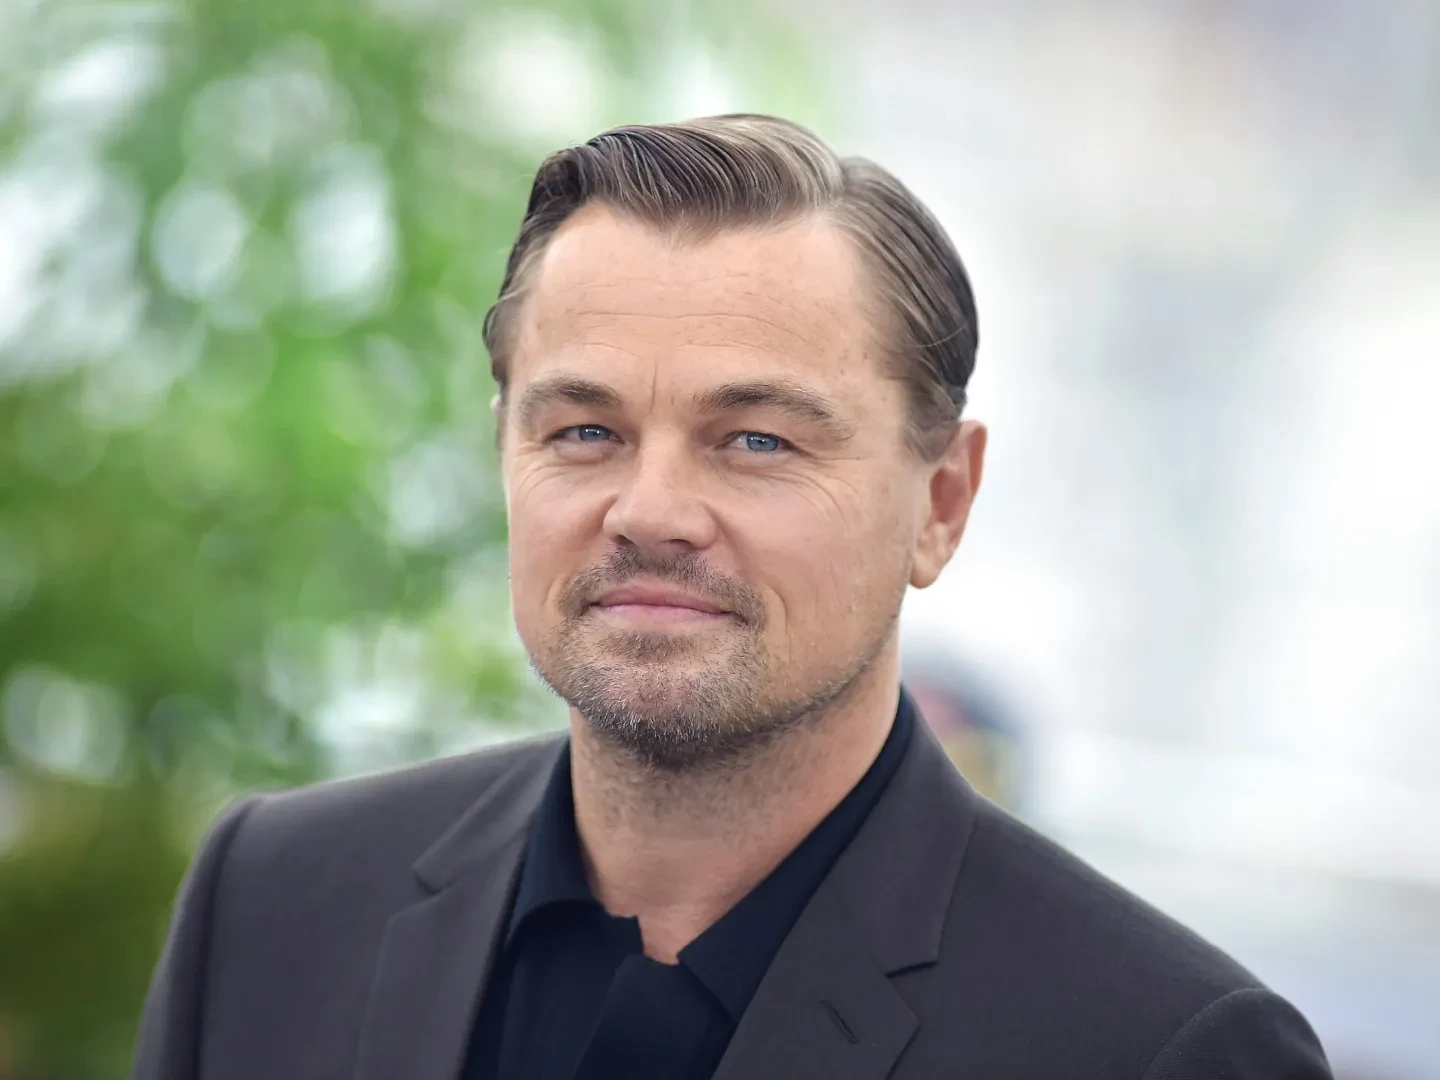 Titanic star Leonardo DiCaprio